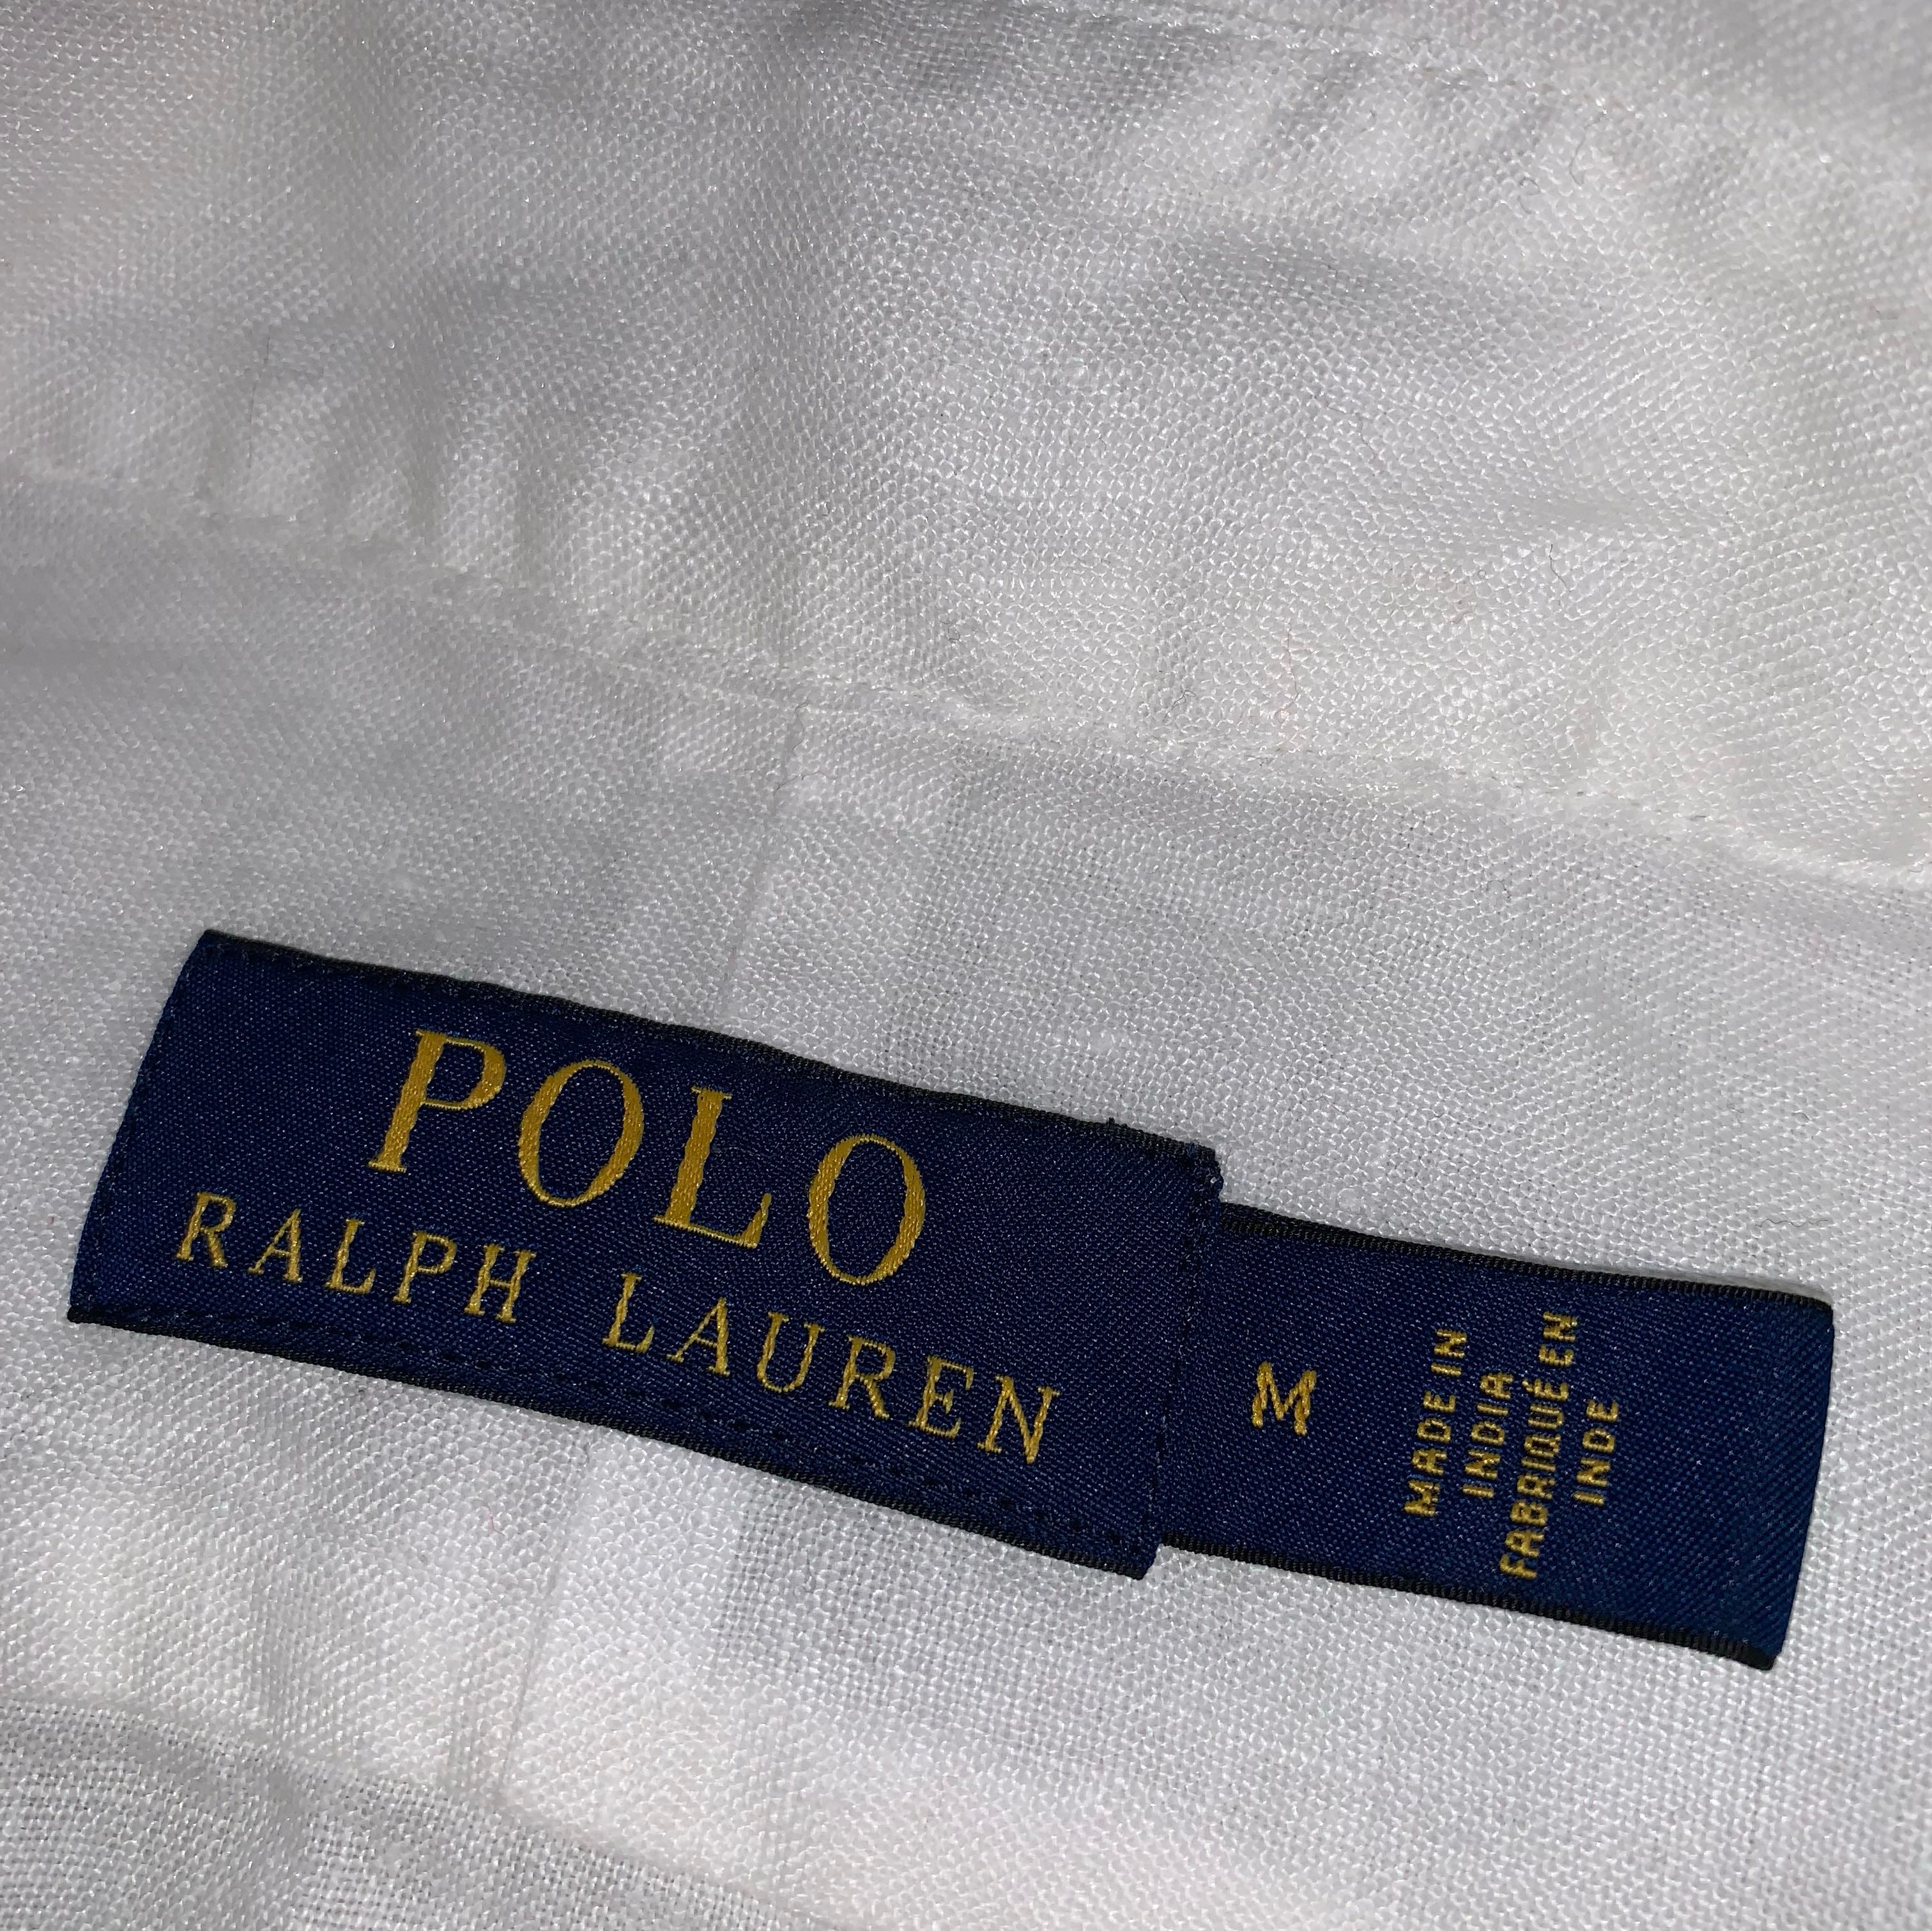 Authentic Polo Ralph Lauren shirt 